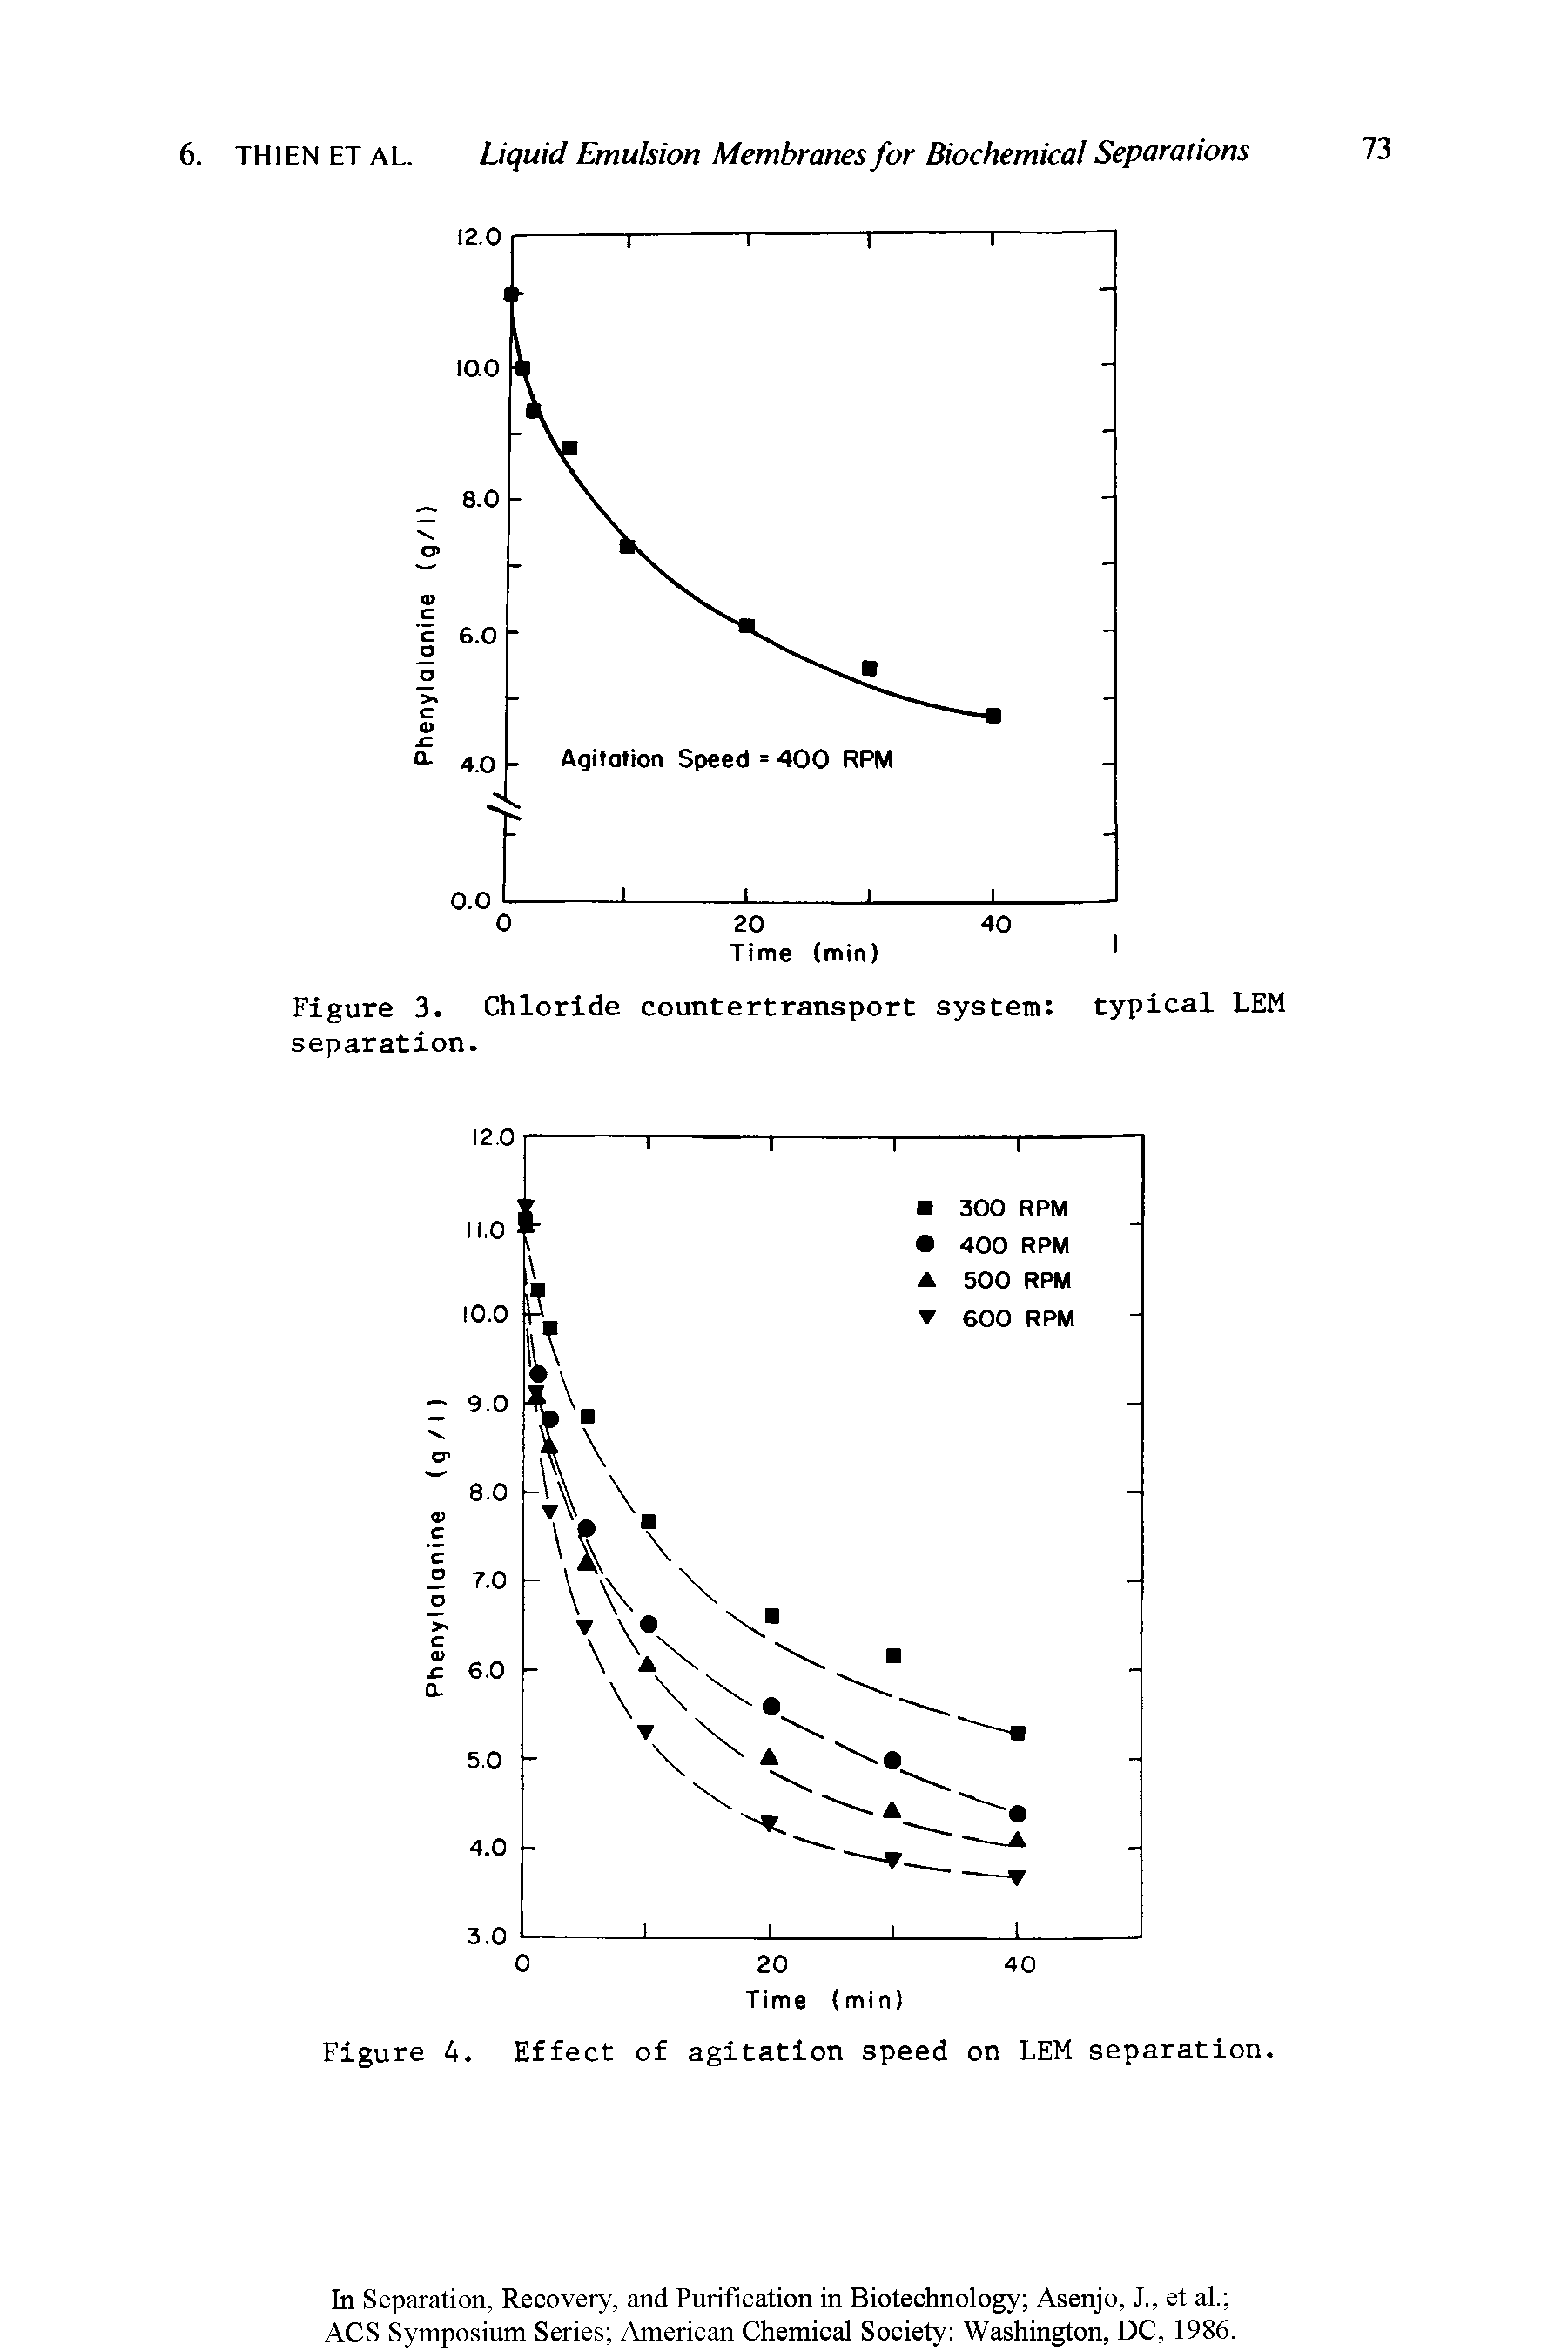 Figure 3. Chloride countertransport system typical LEM separation.